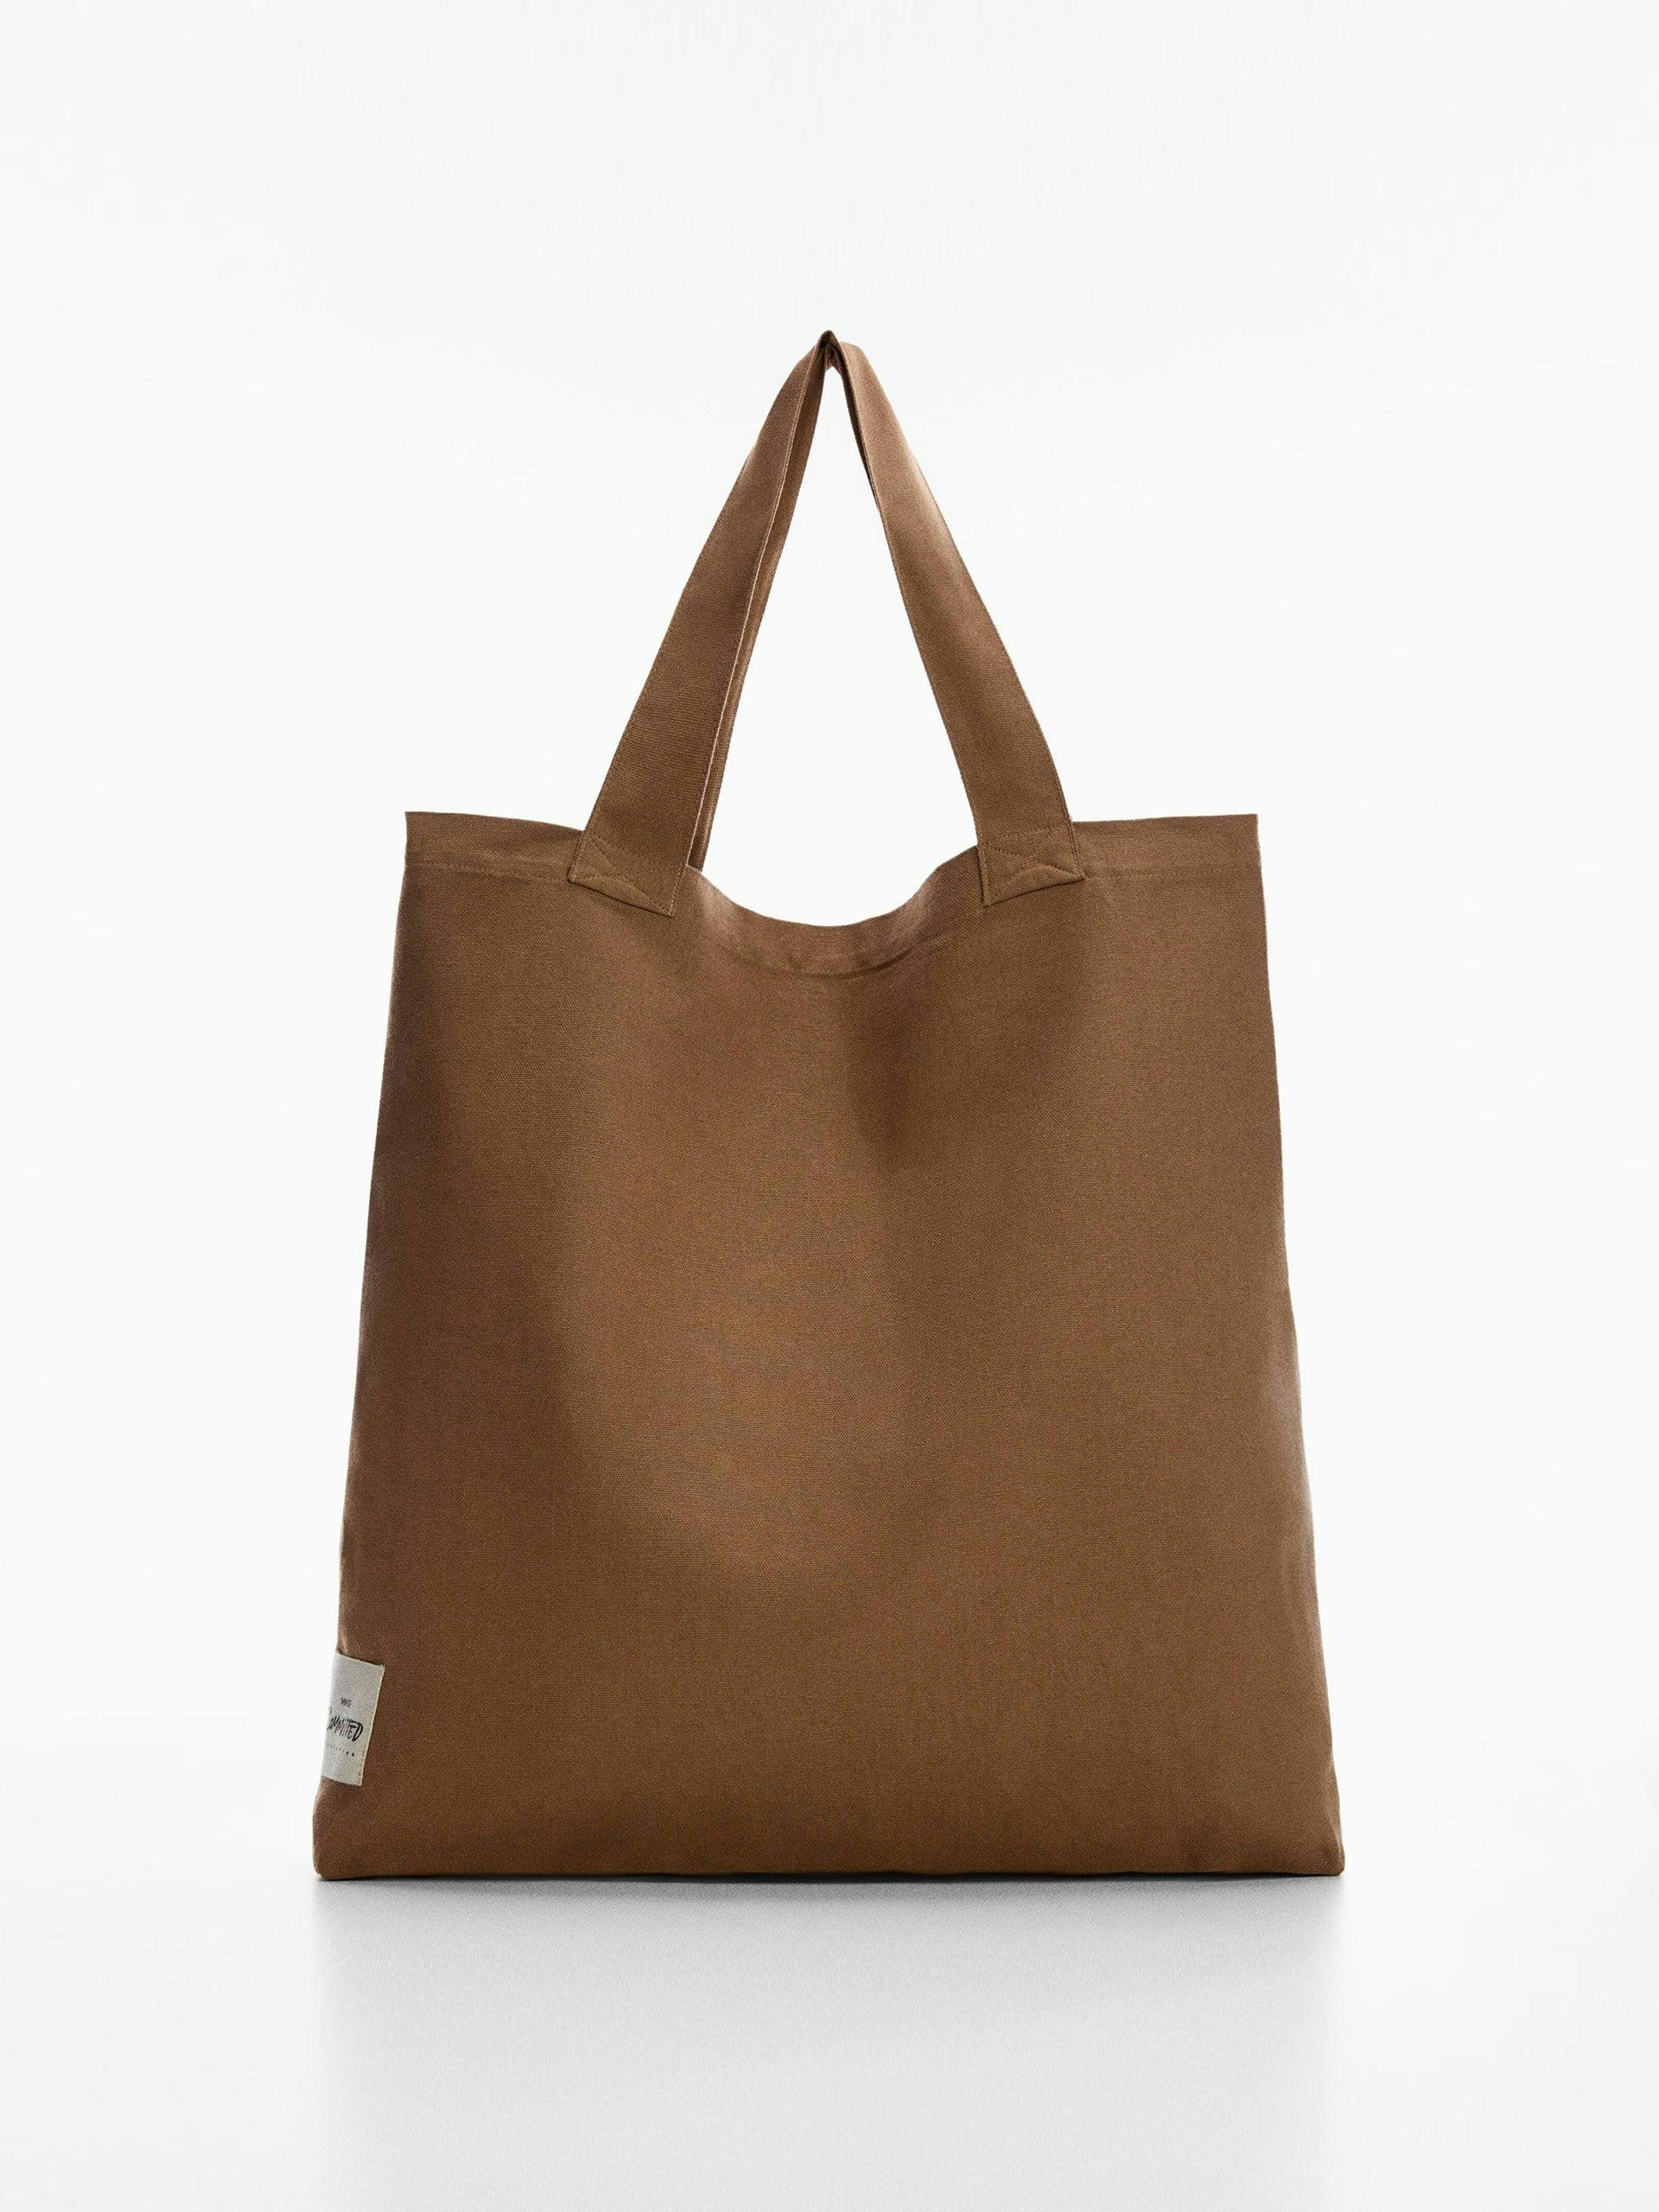 Brown canvas tote bag